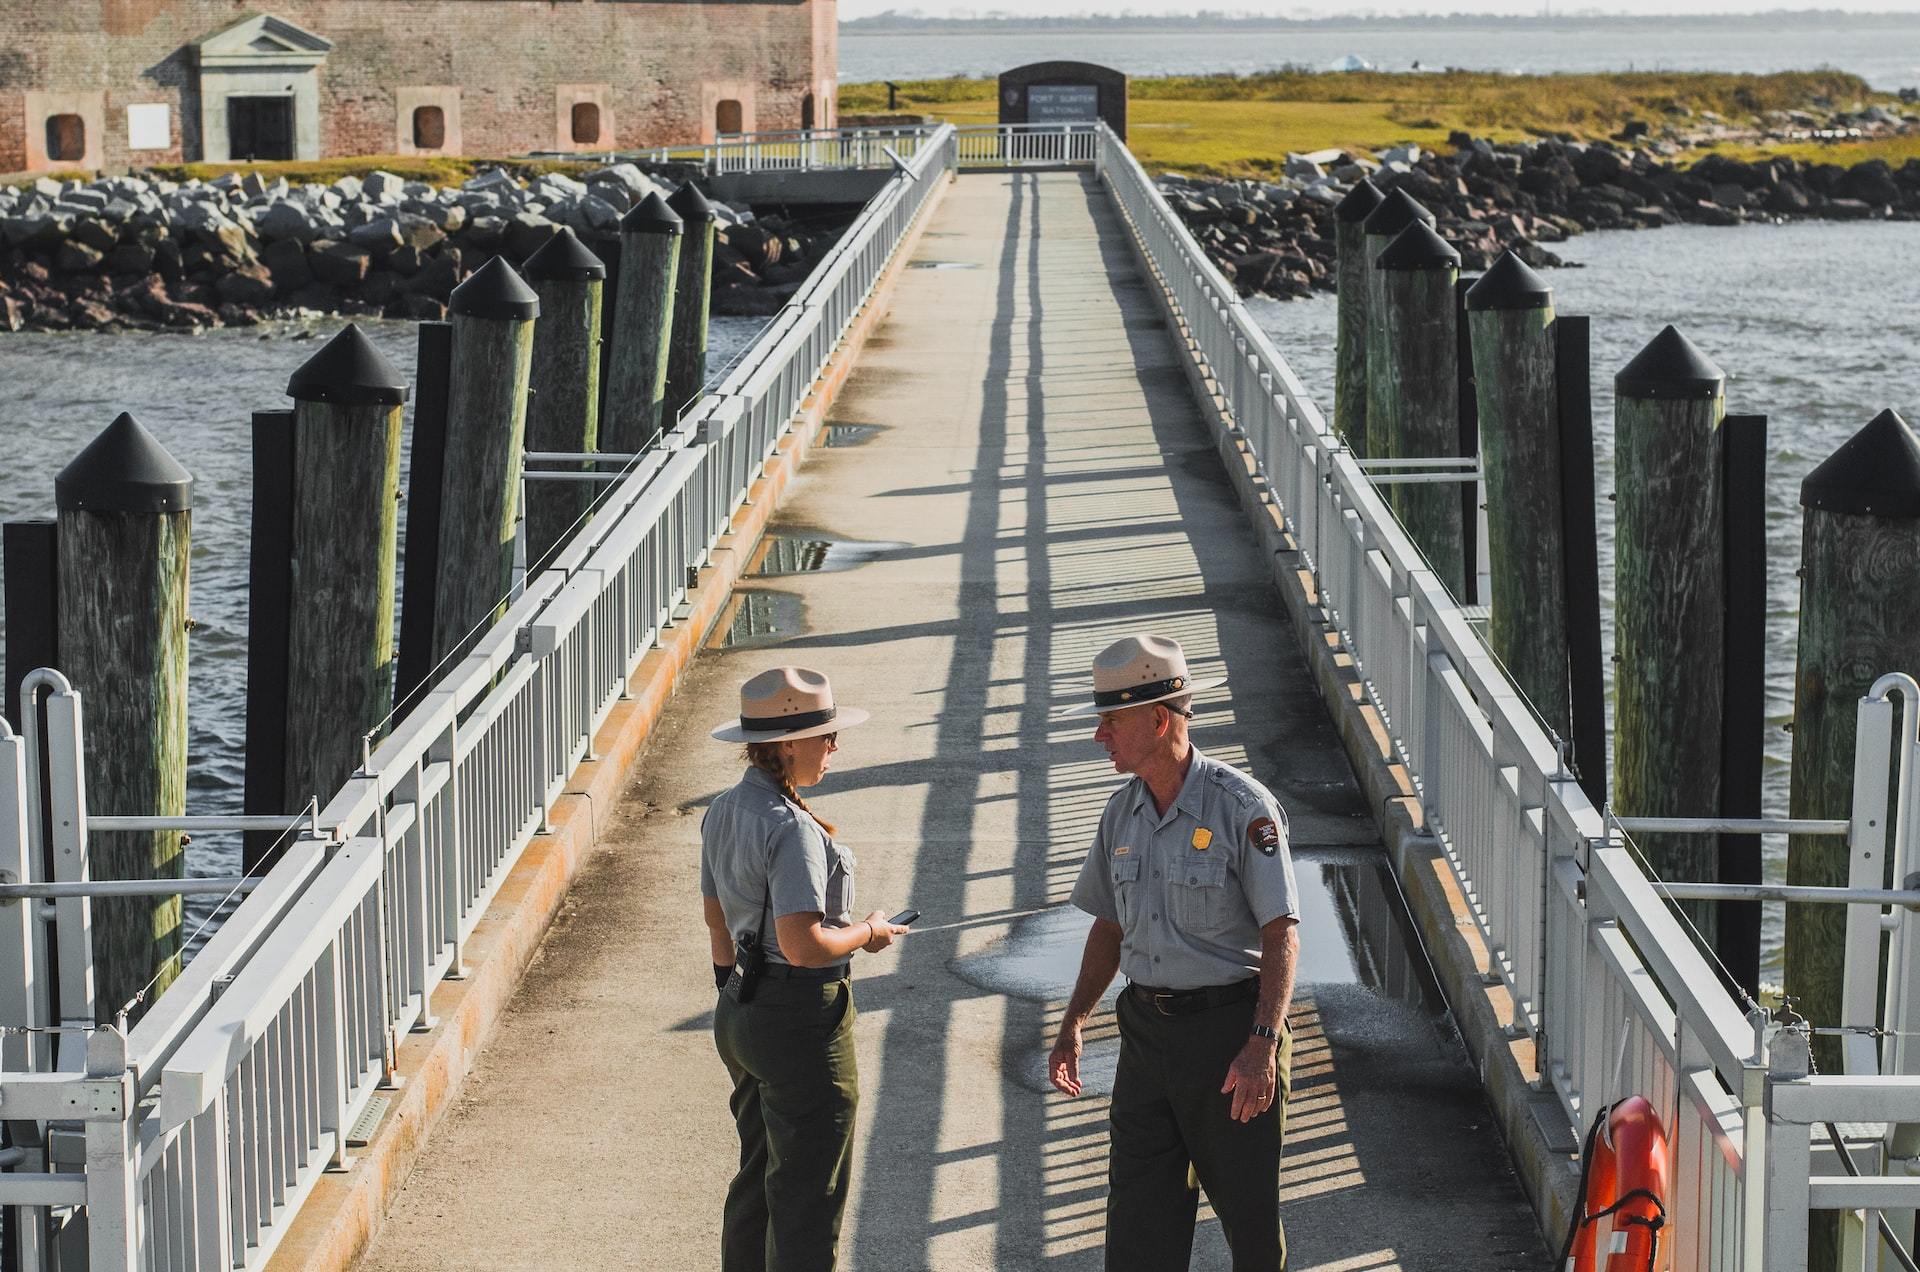 Two park rangers talk at the end of a long concrete pier.